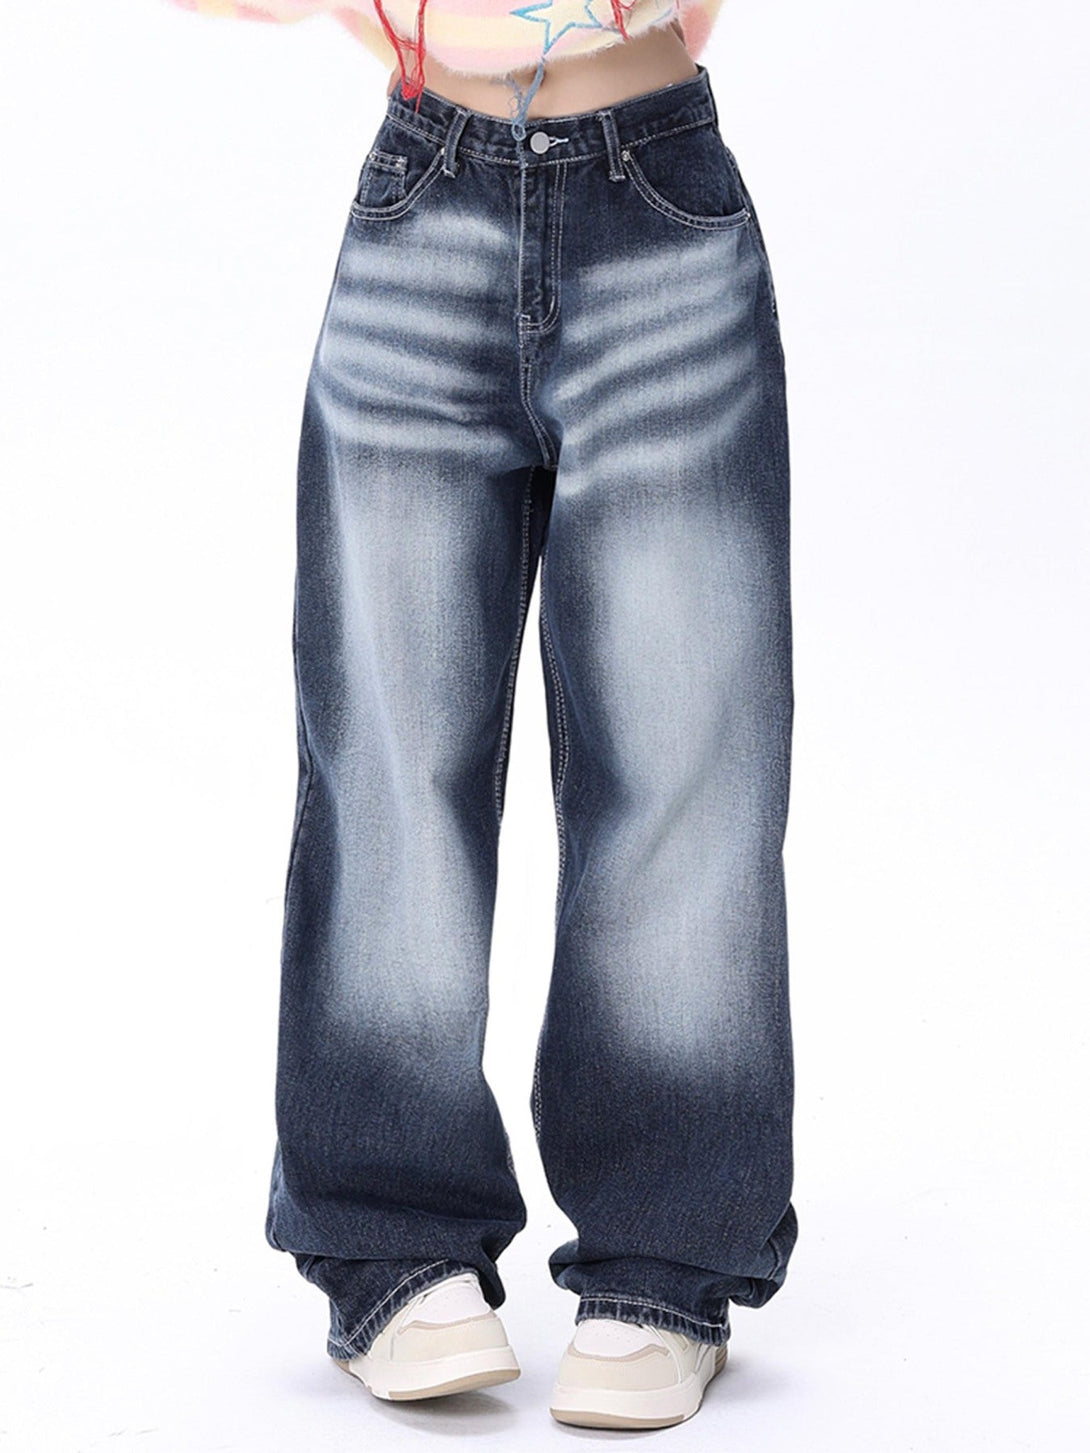 Majesda® - Washed And Creased Wide-leg Jeans - 1979- Outfit Ideas - Streetwear Fashion - majesda.com